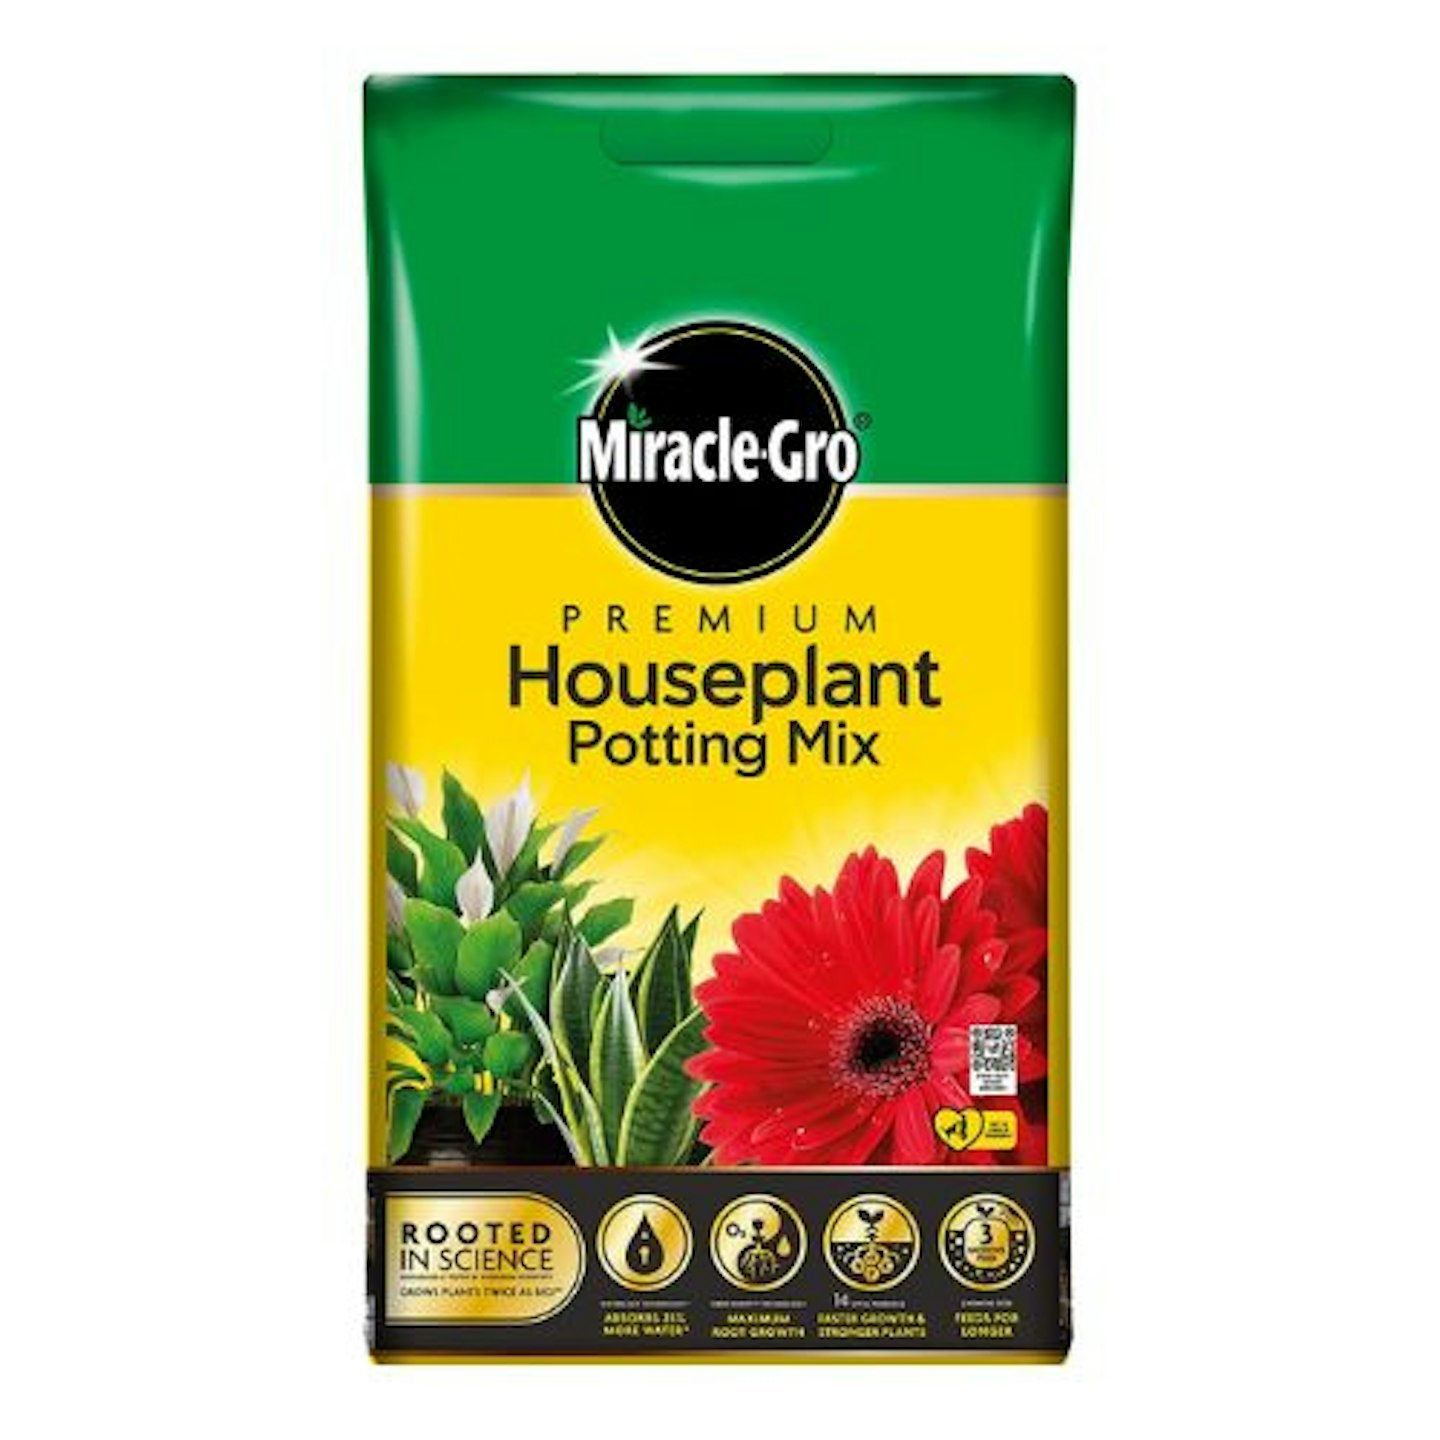 Miracle-Gro Premium Houseplant Potting Mix compost - 10 Litre Bag, (New 2020 Range), Yellow